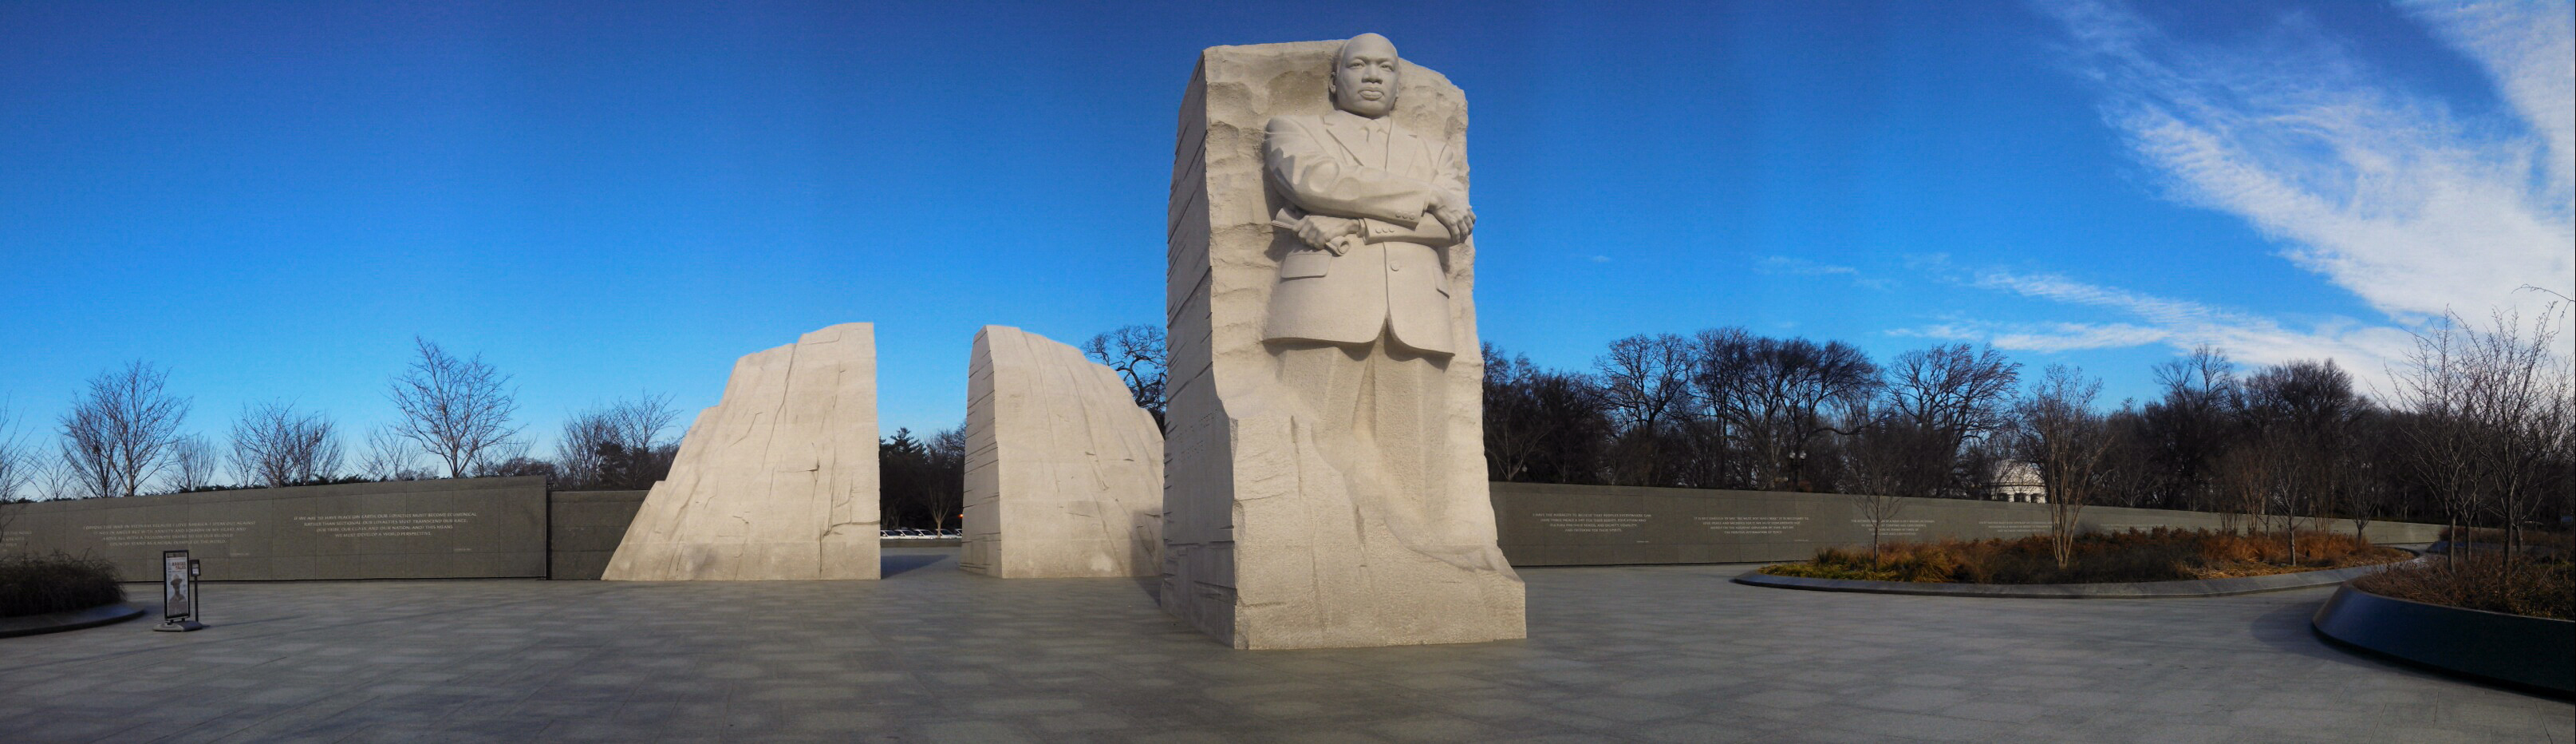 Building the Memorial - Martin Luther King, Jr. Memorial ...